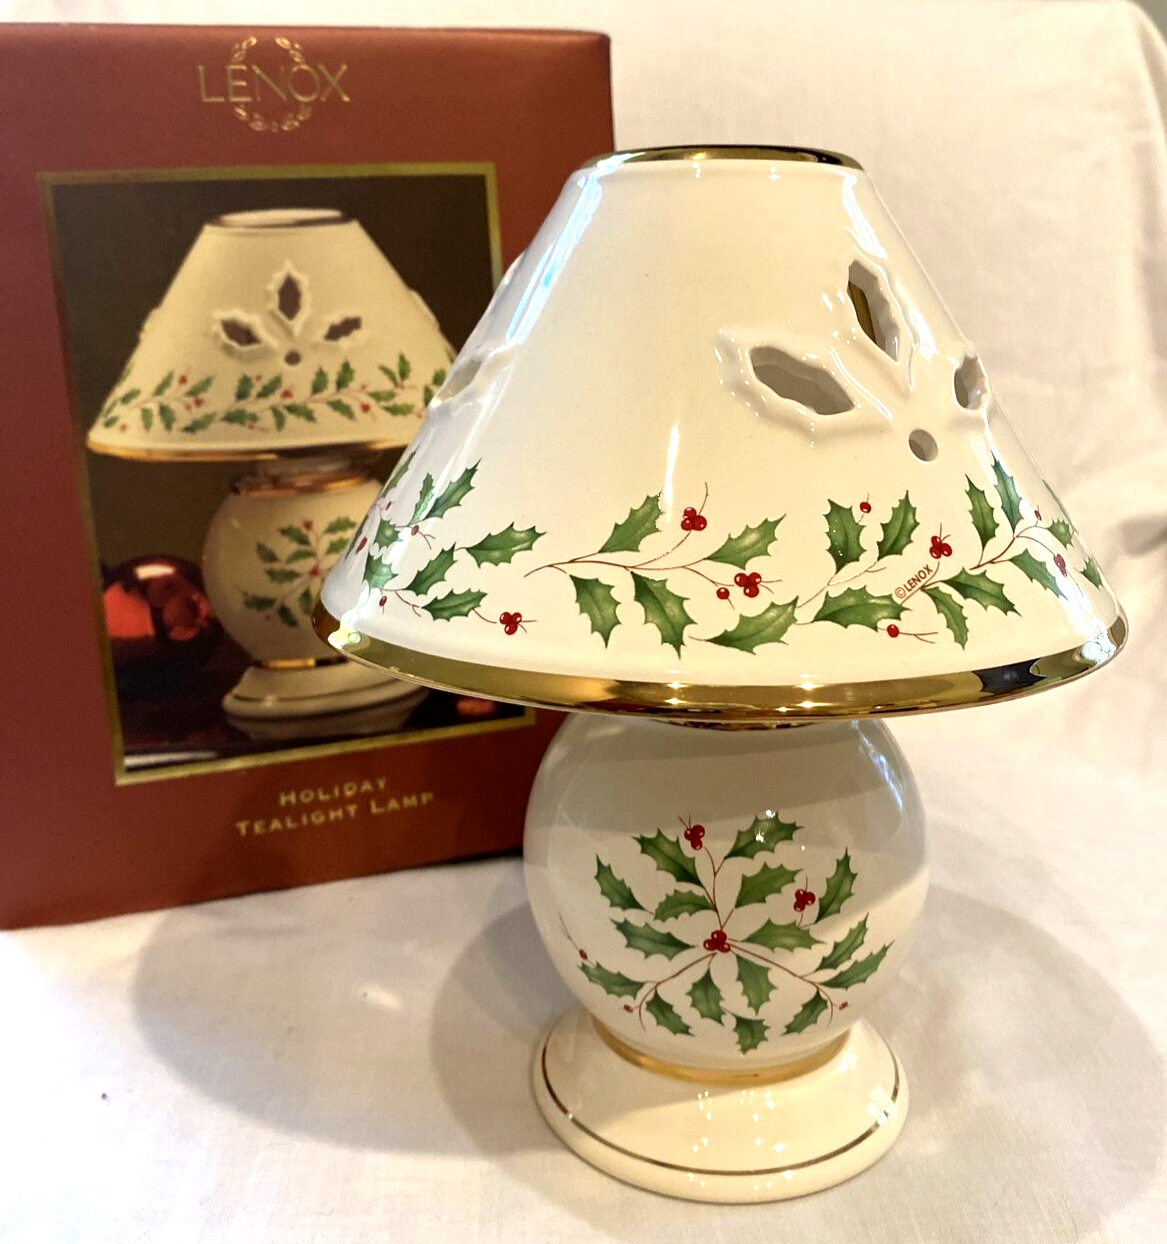 Primary image for Lenox Holiday Tealight Lamp NIB